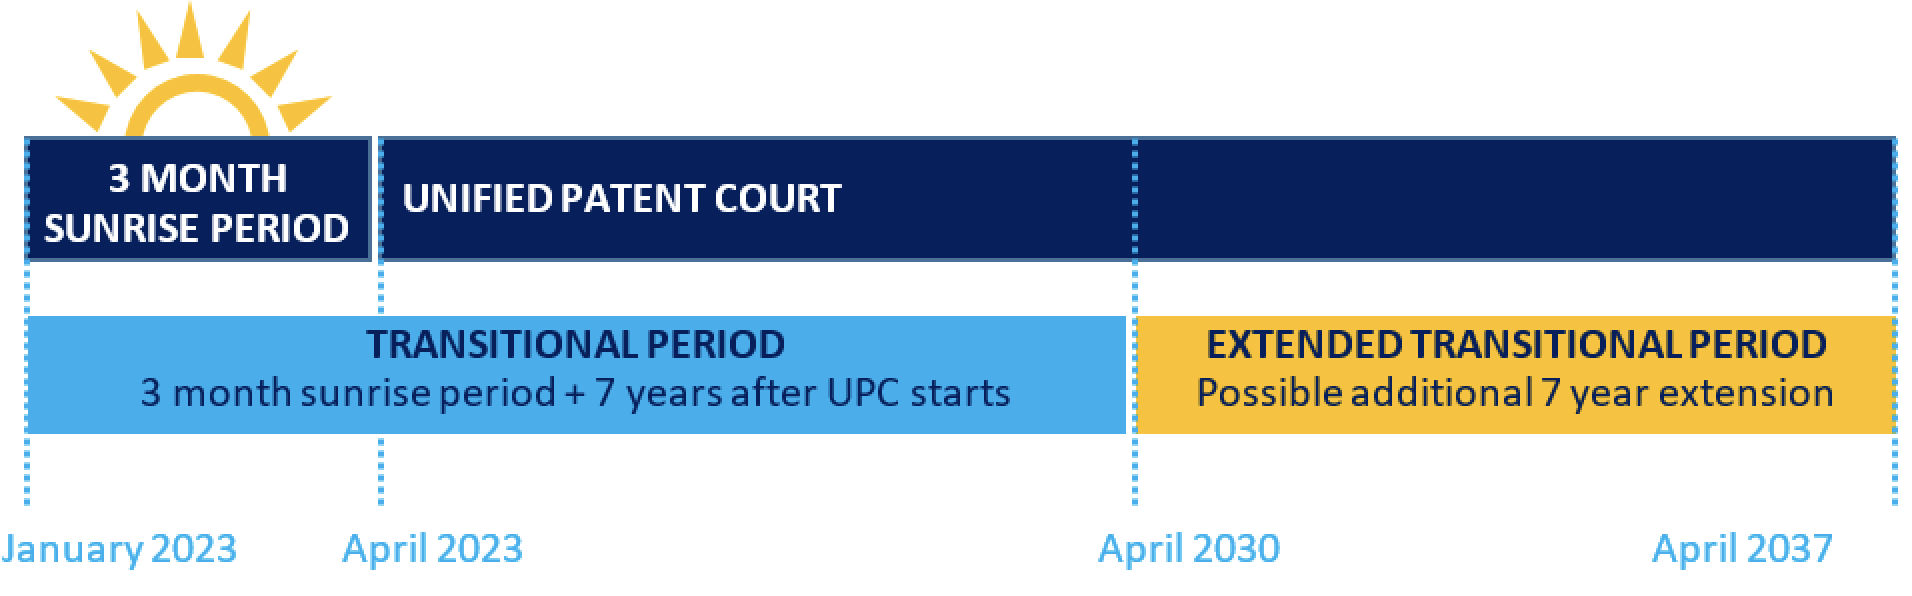 UPC sunrise period starts jan 2023